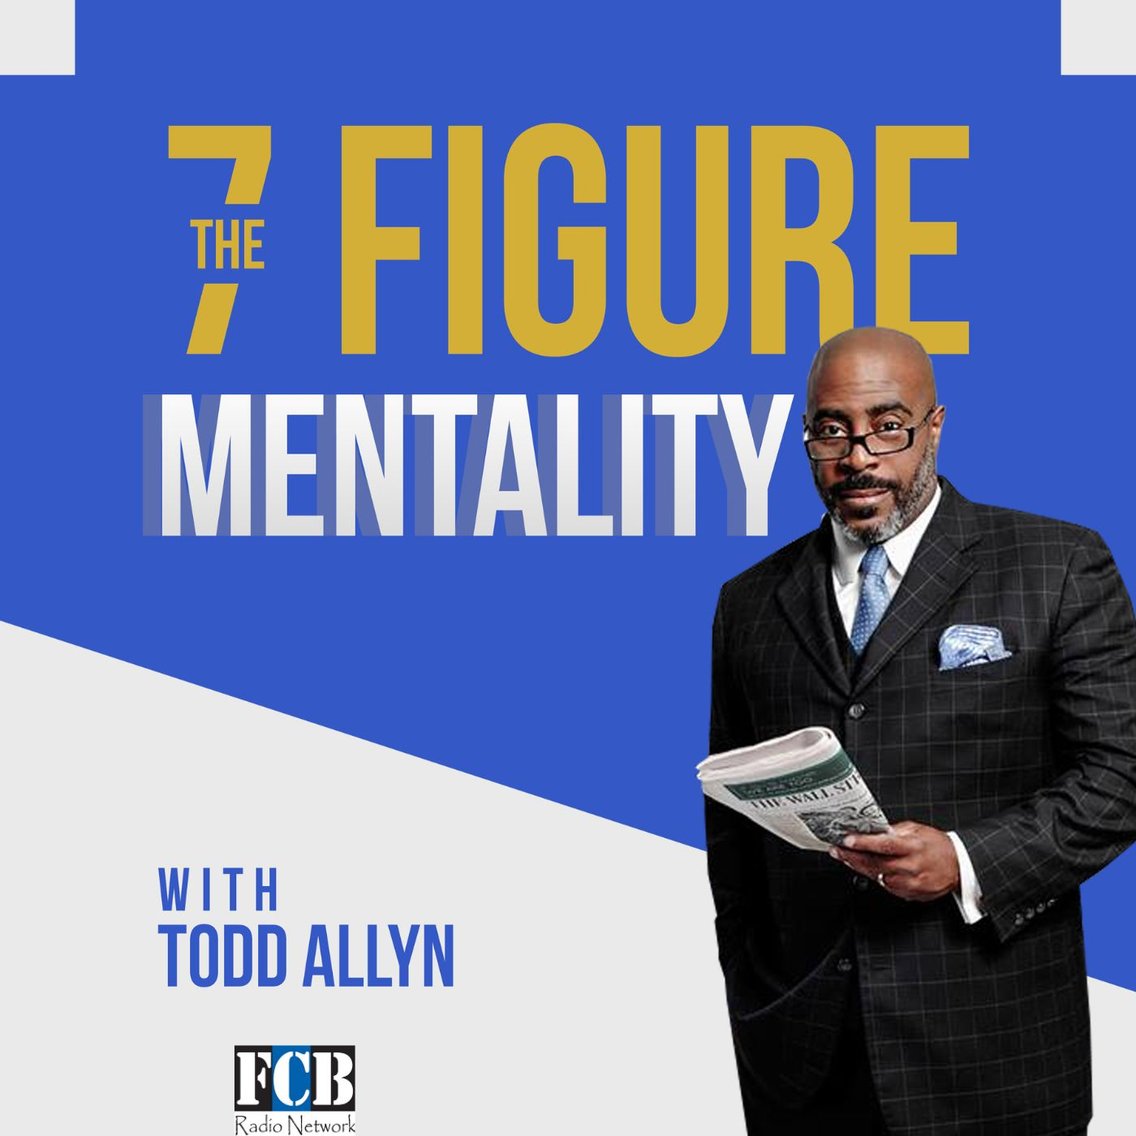 The 7 Figure Mentality with Todd Allyn - immagine di copertina
